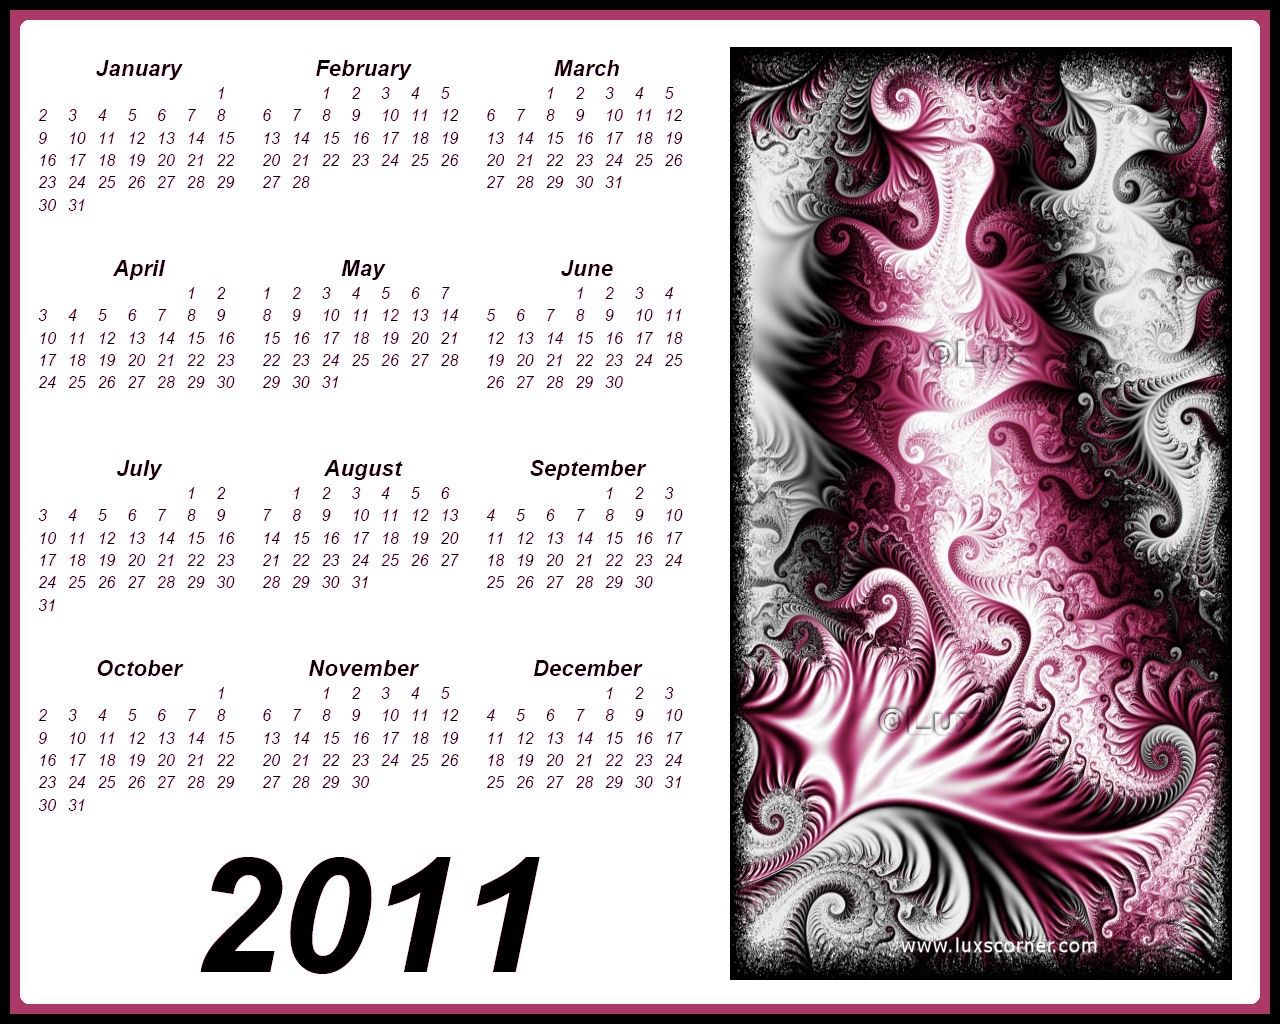 Fractal Calendar 2011 by Lux.